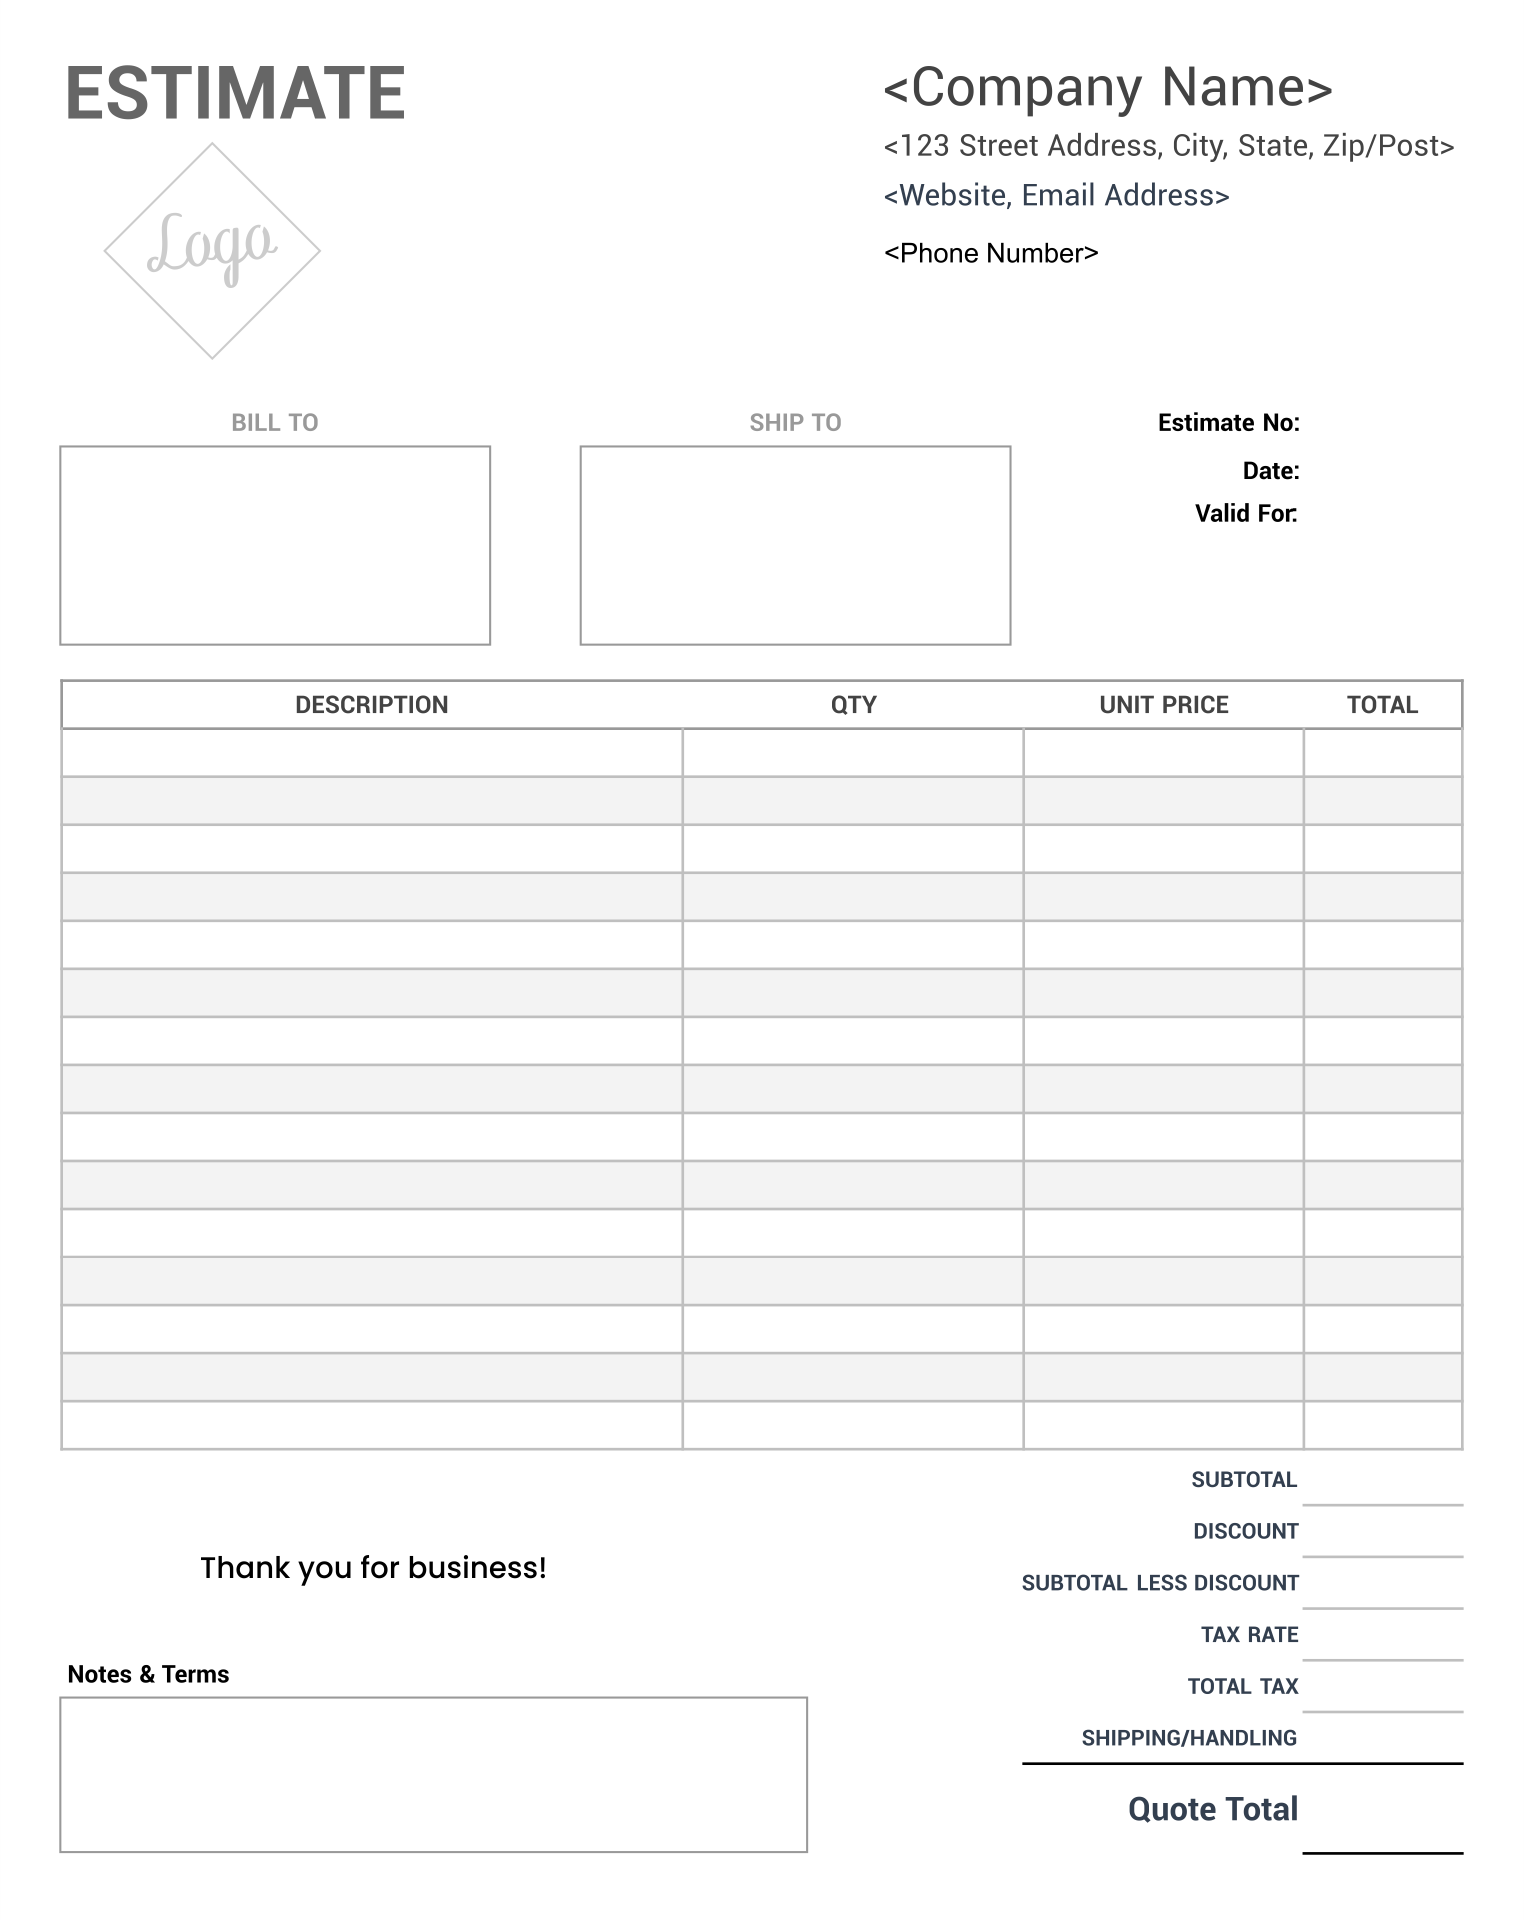 job-estimate-form-printable-printable-forms-free-online